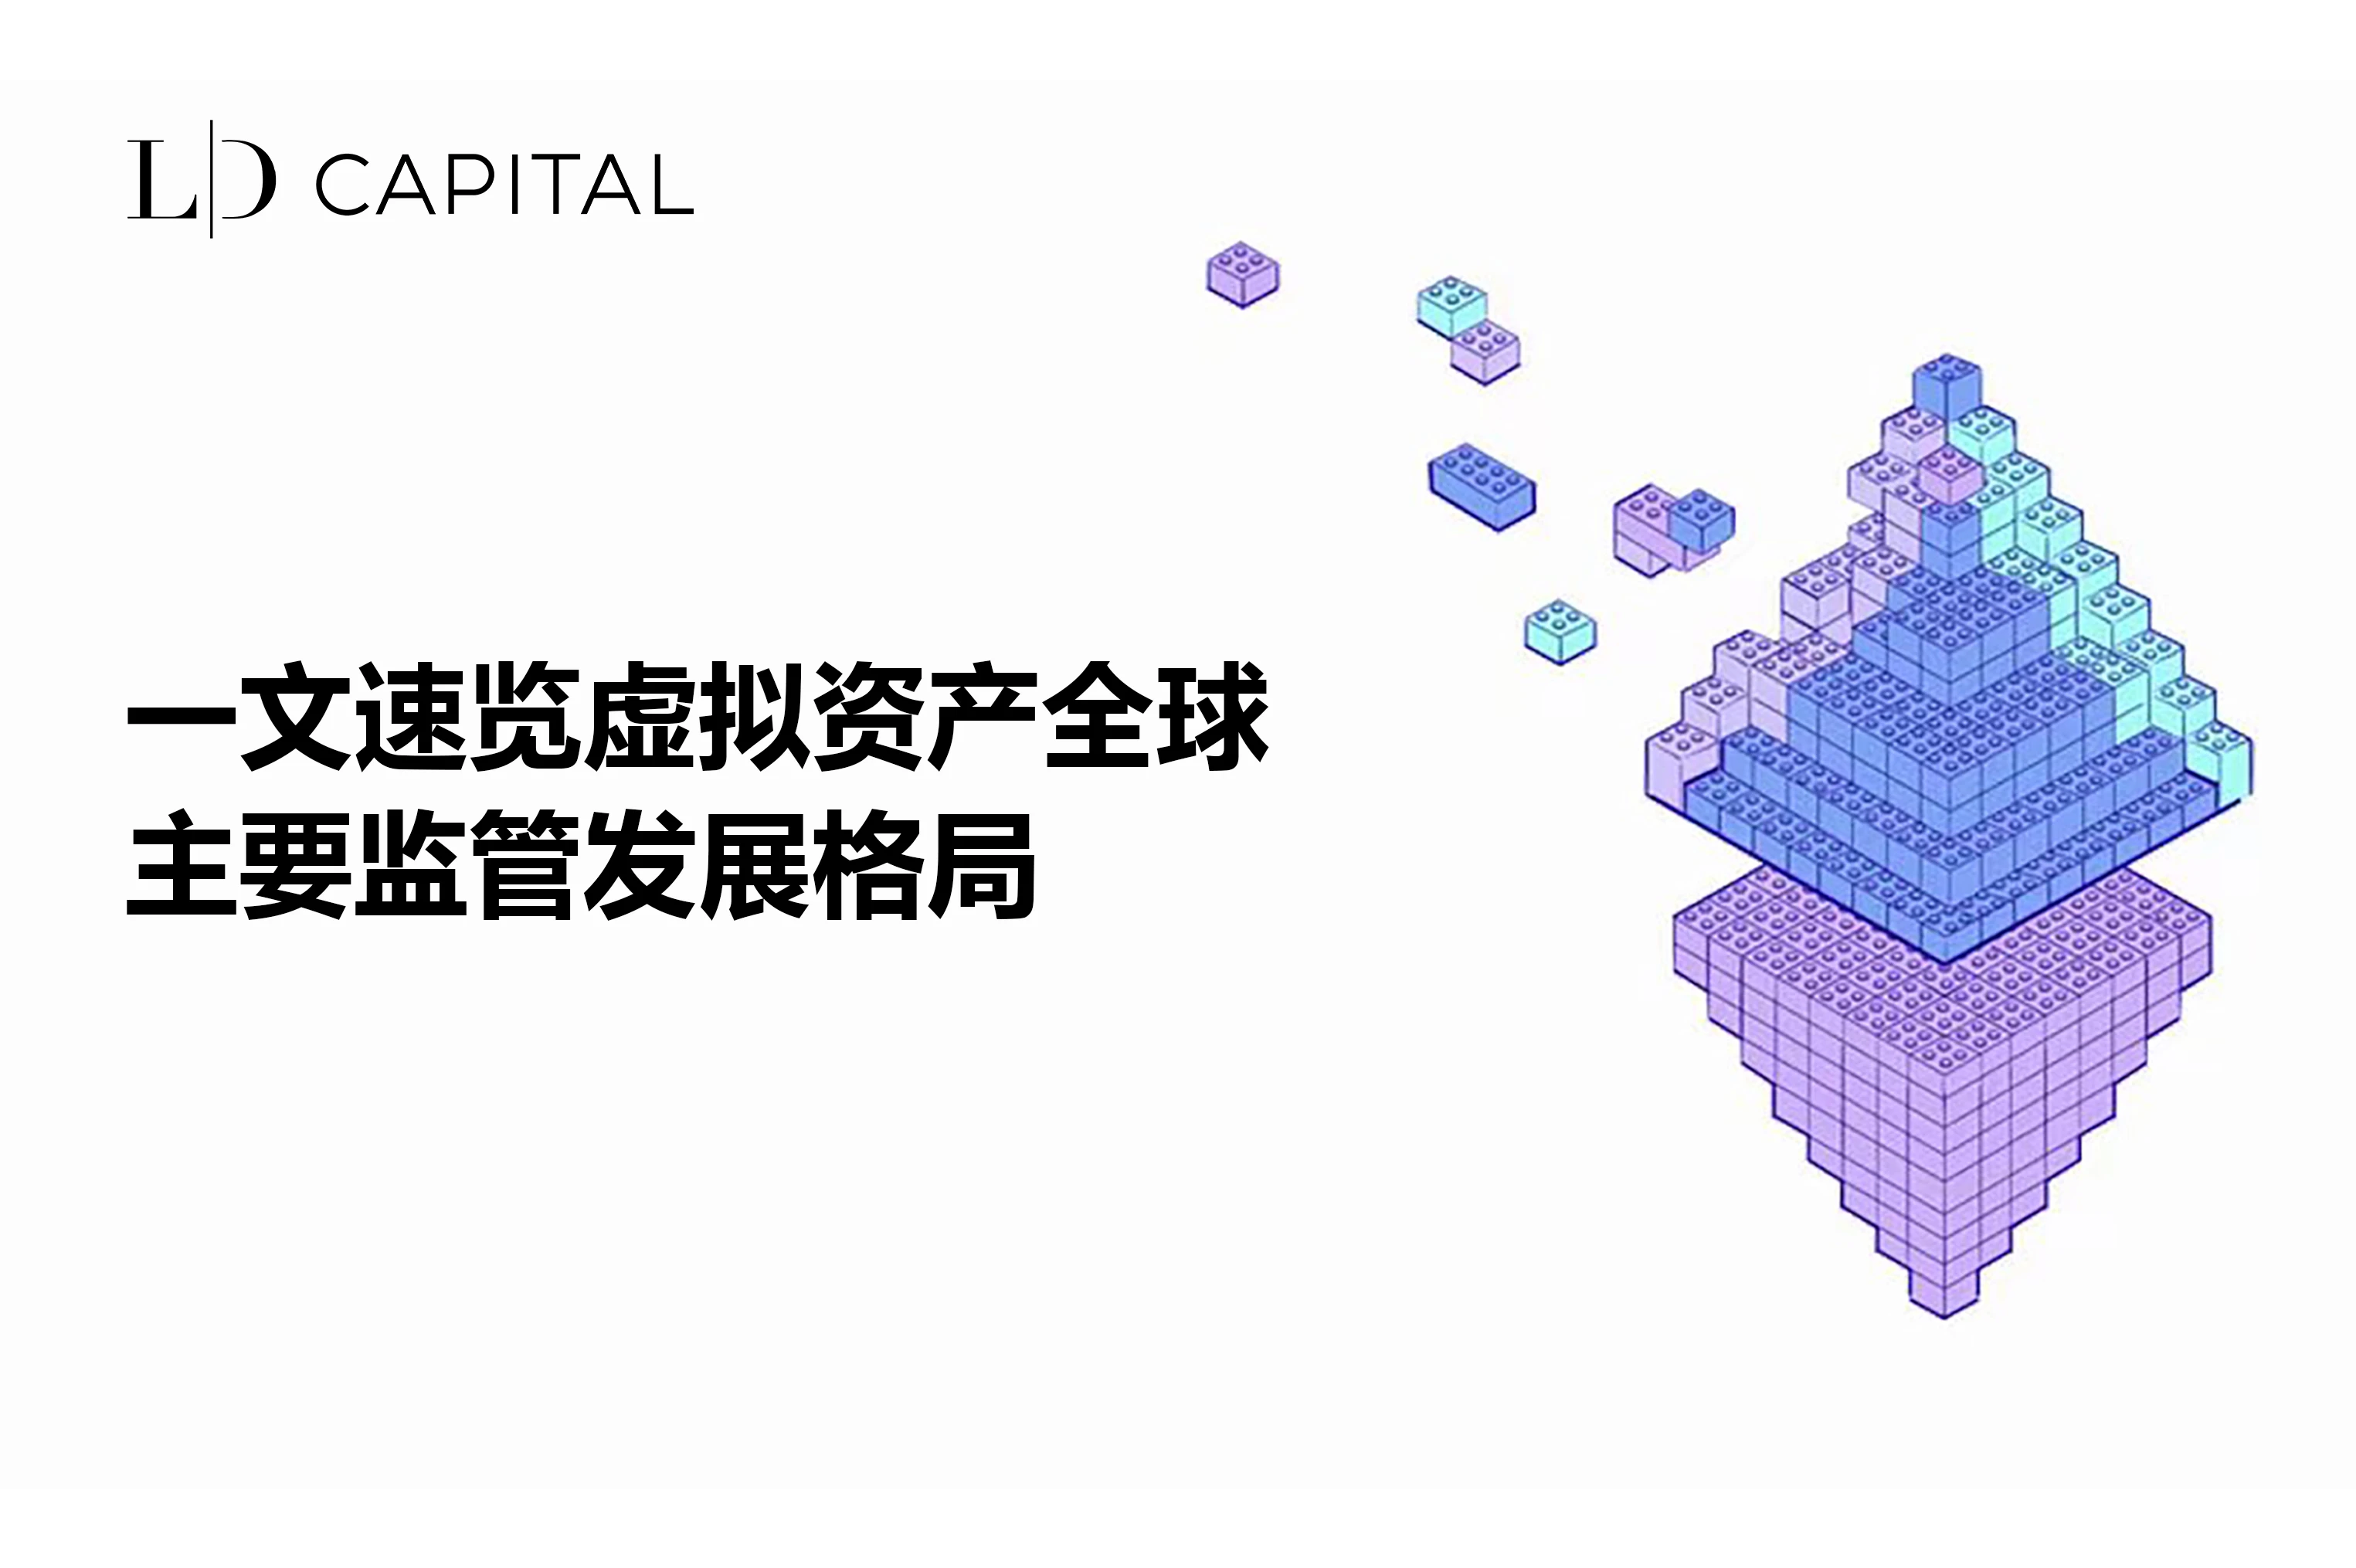 LD Capital：一文速览虚拟资产全球主要监管发展格局